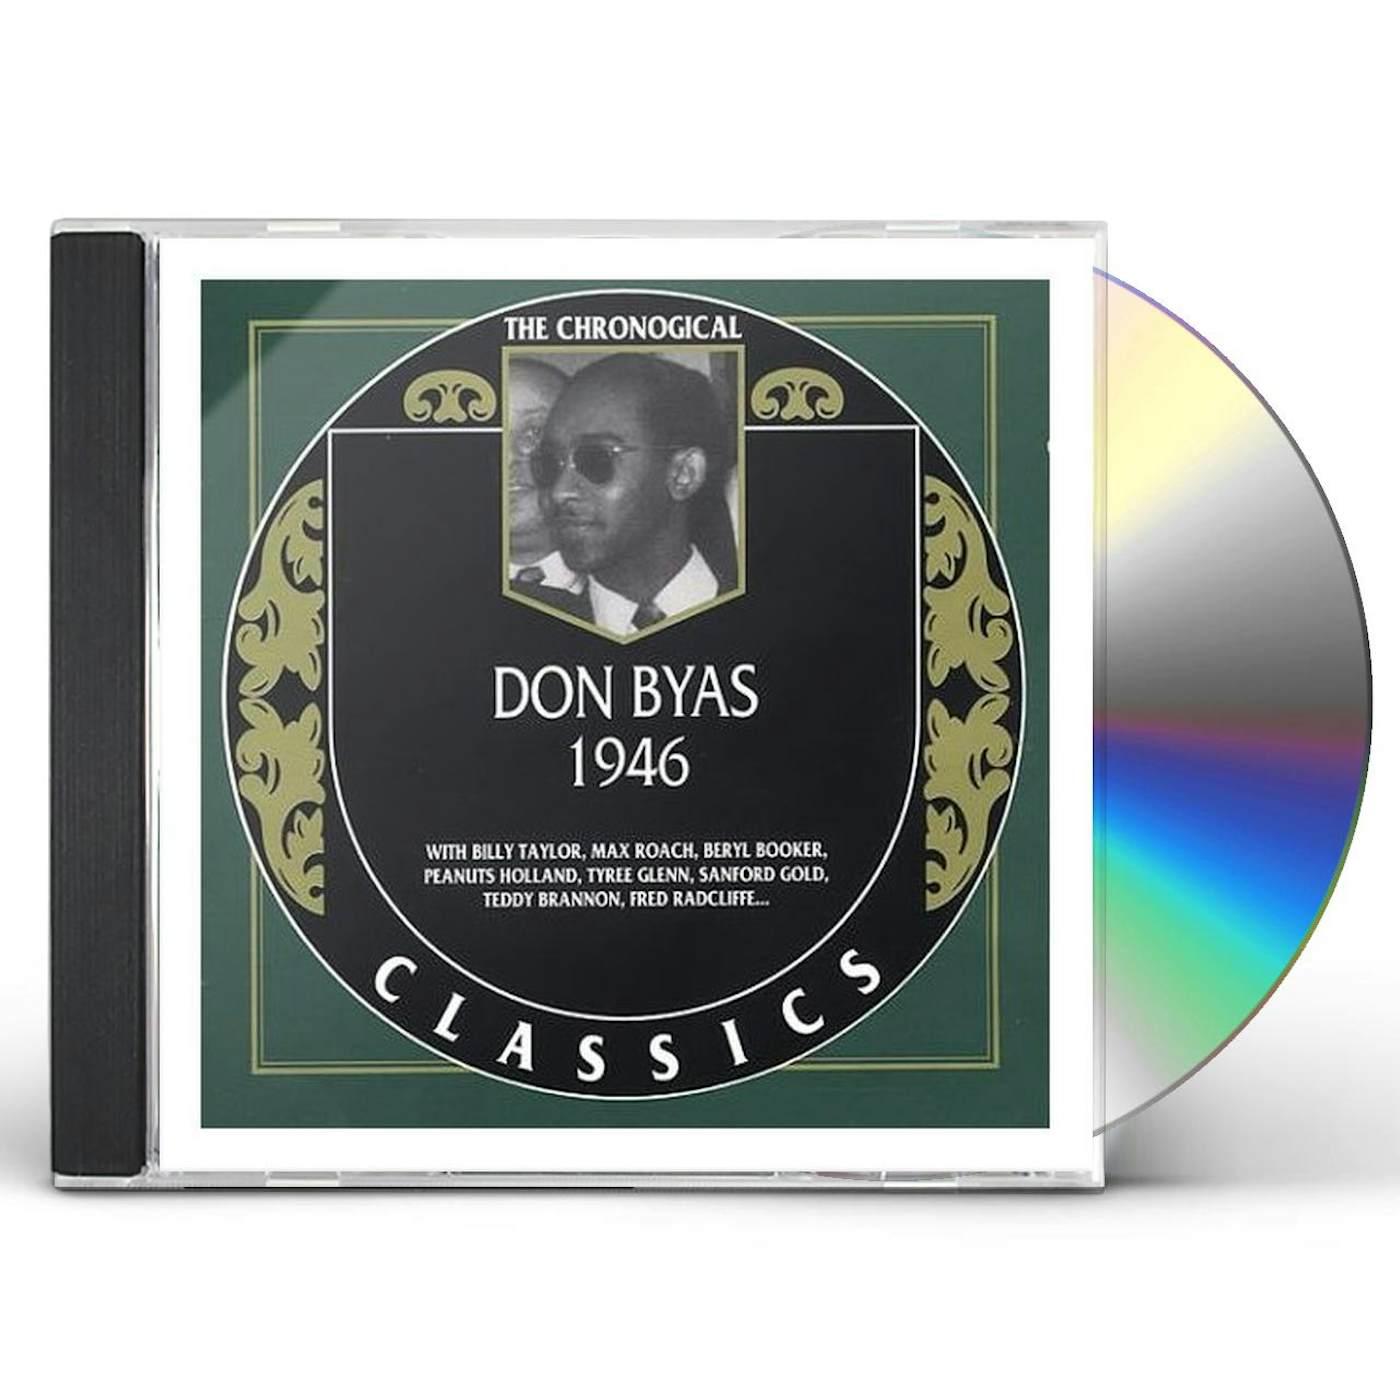 Don Byas 1946 CD